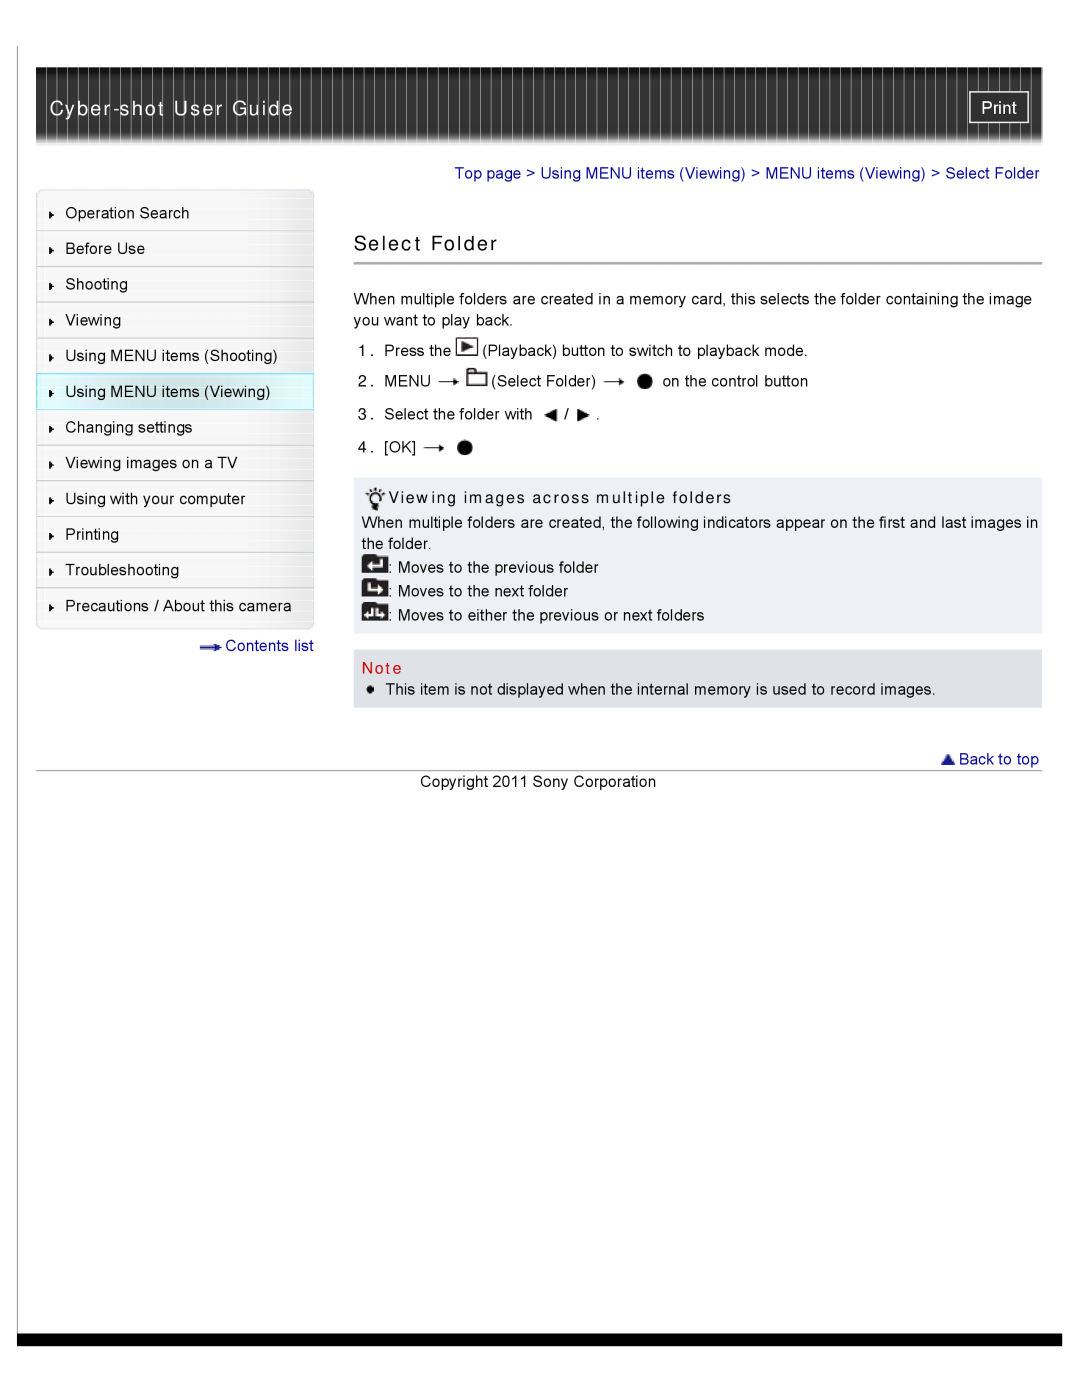 Sony DSC-W510 manual Select Folder, Cyber-shot User Guide, Print, Viewing images across multiple folders, Contents list 